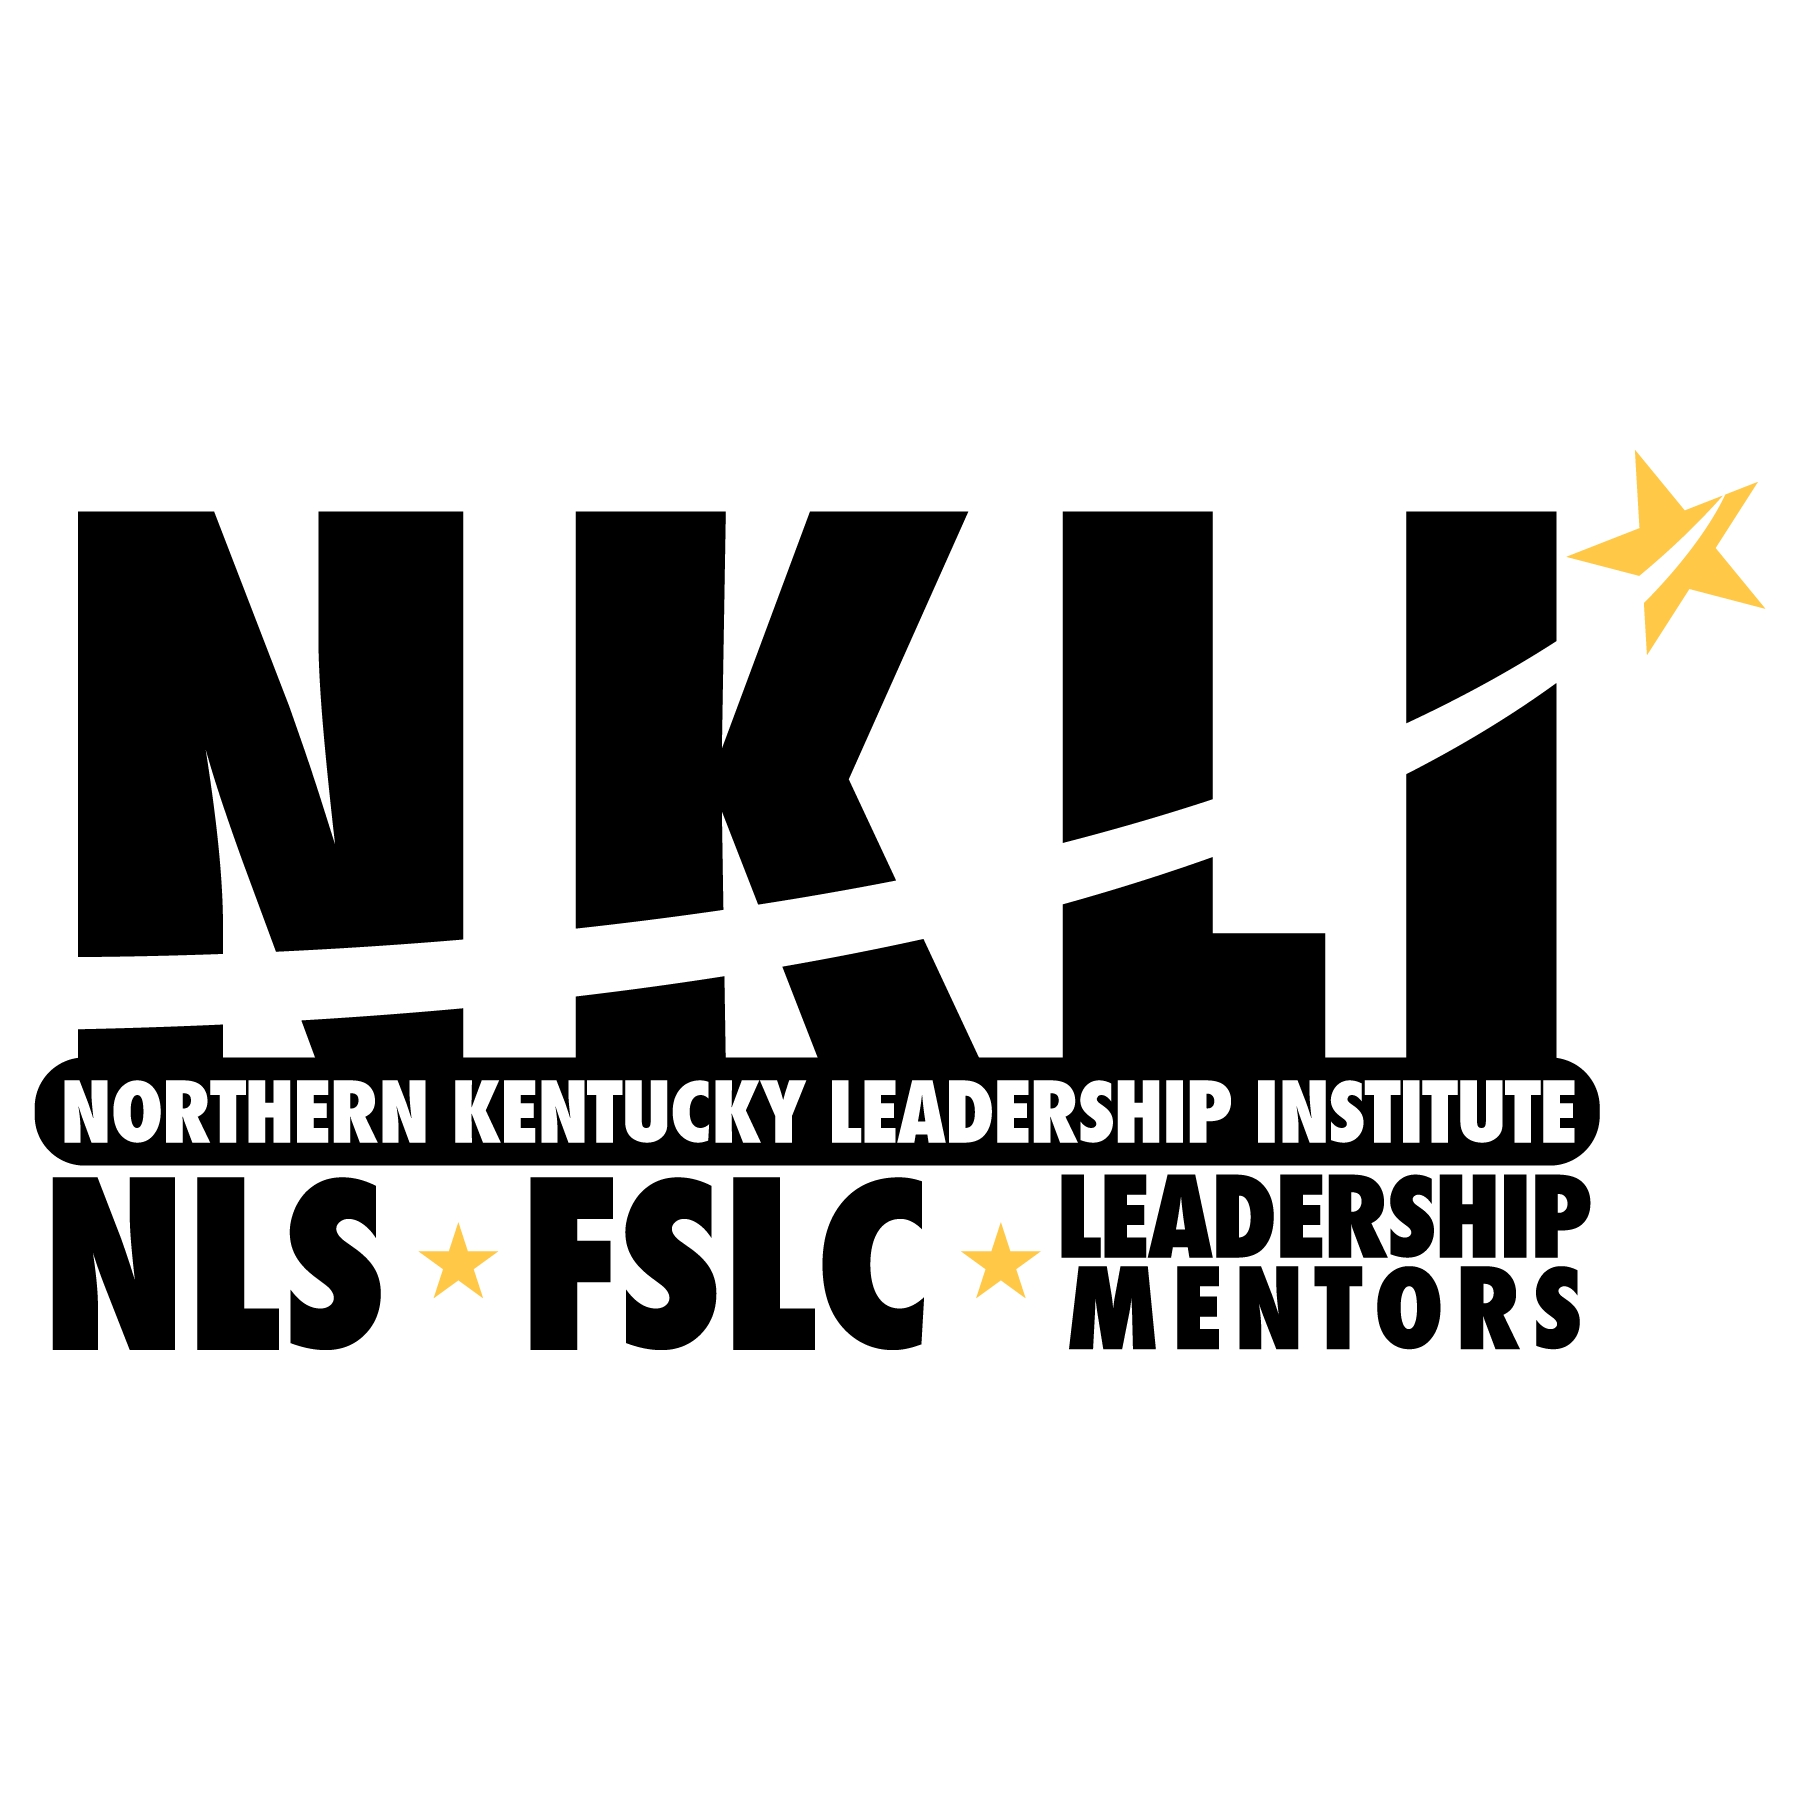 The Northern Kentucky Leadership Institute logo